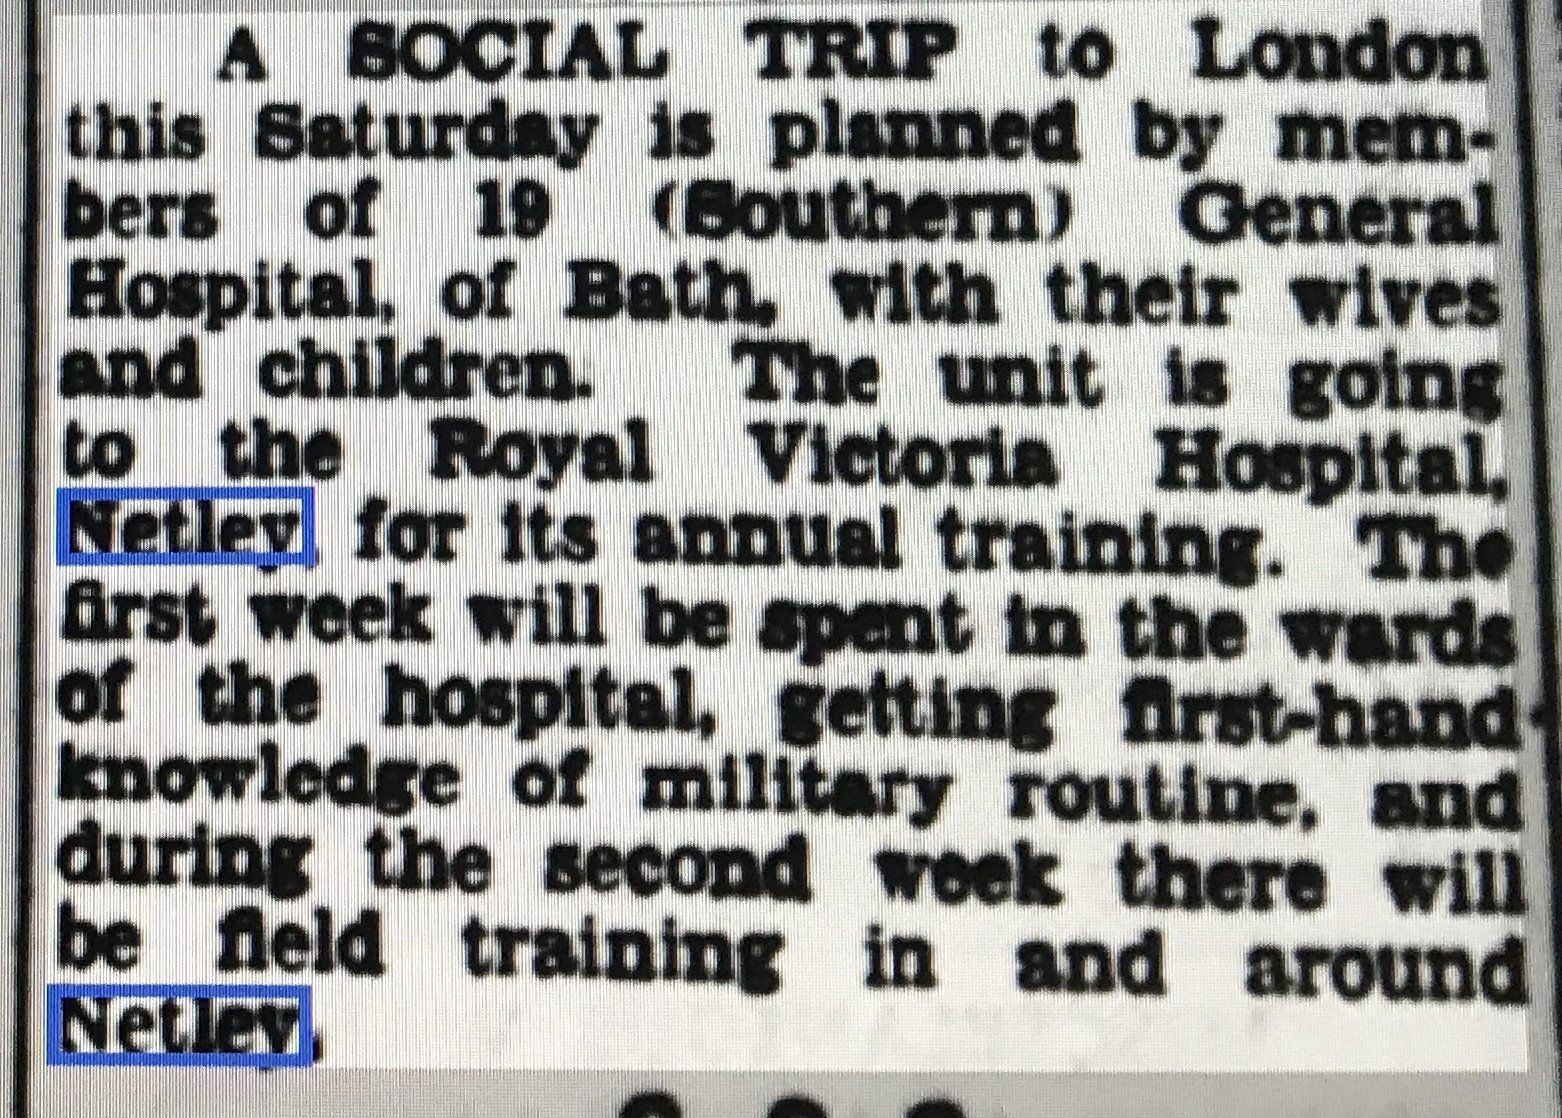 Southern General Hospital Bath at Netley Hospital 1950